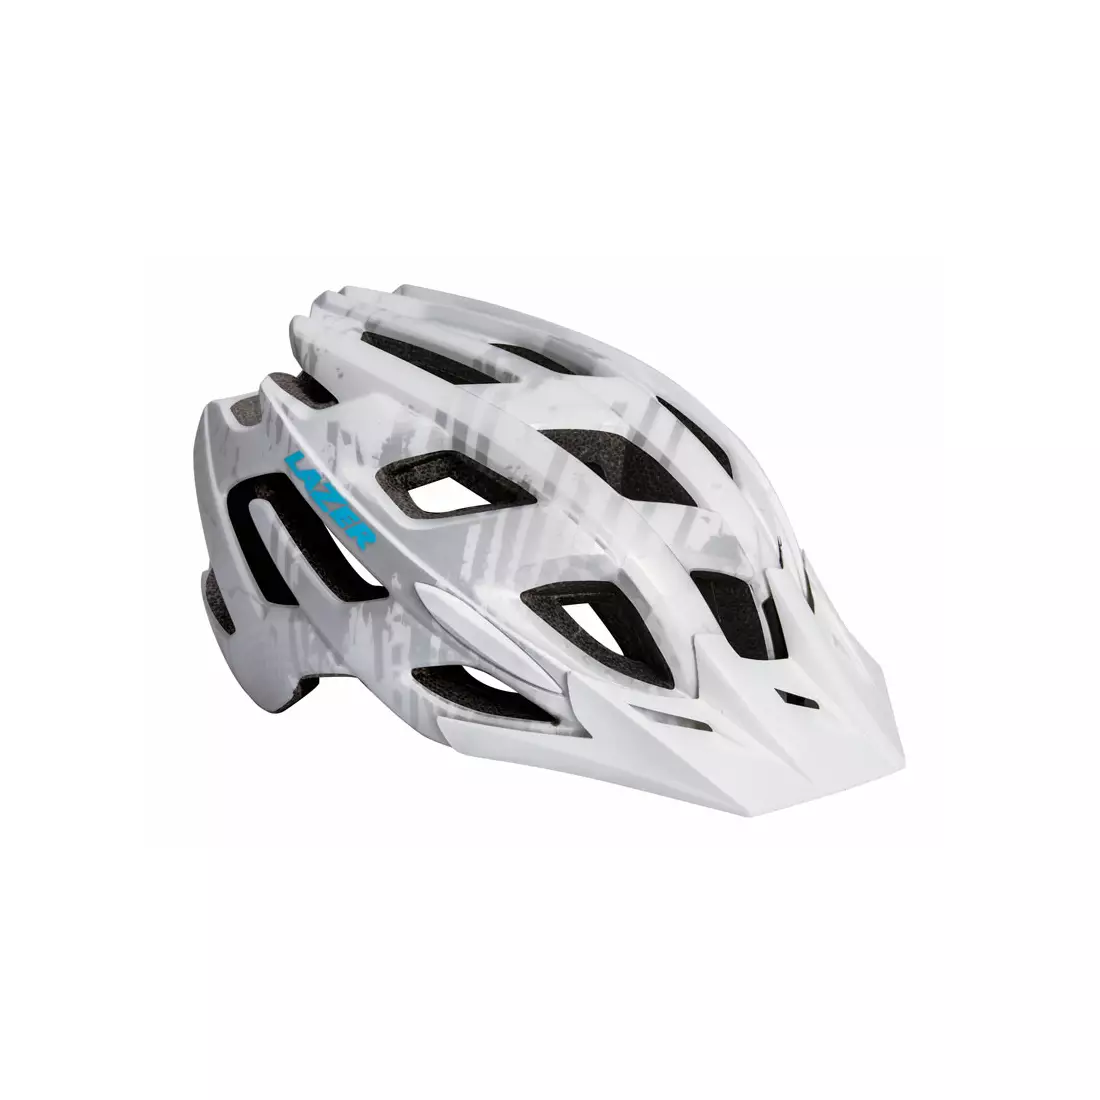 LAZER - ULTRAX MTB bicycle helmet, color: white matt